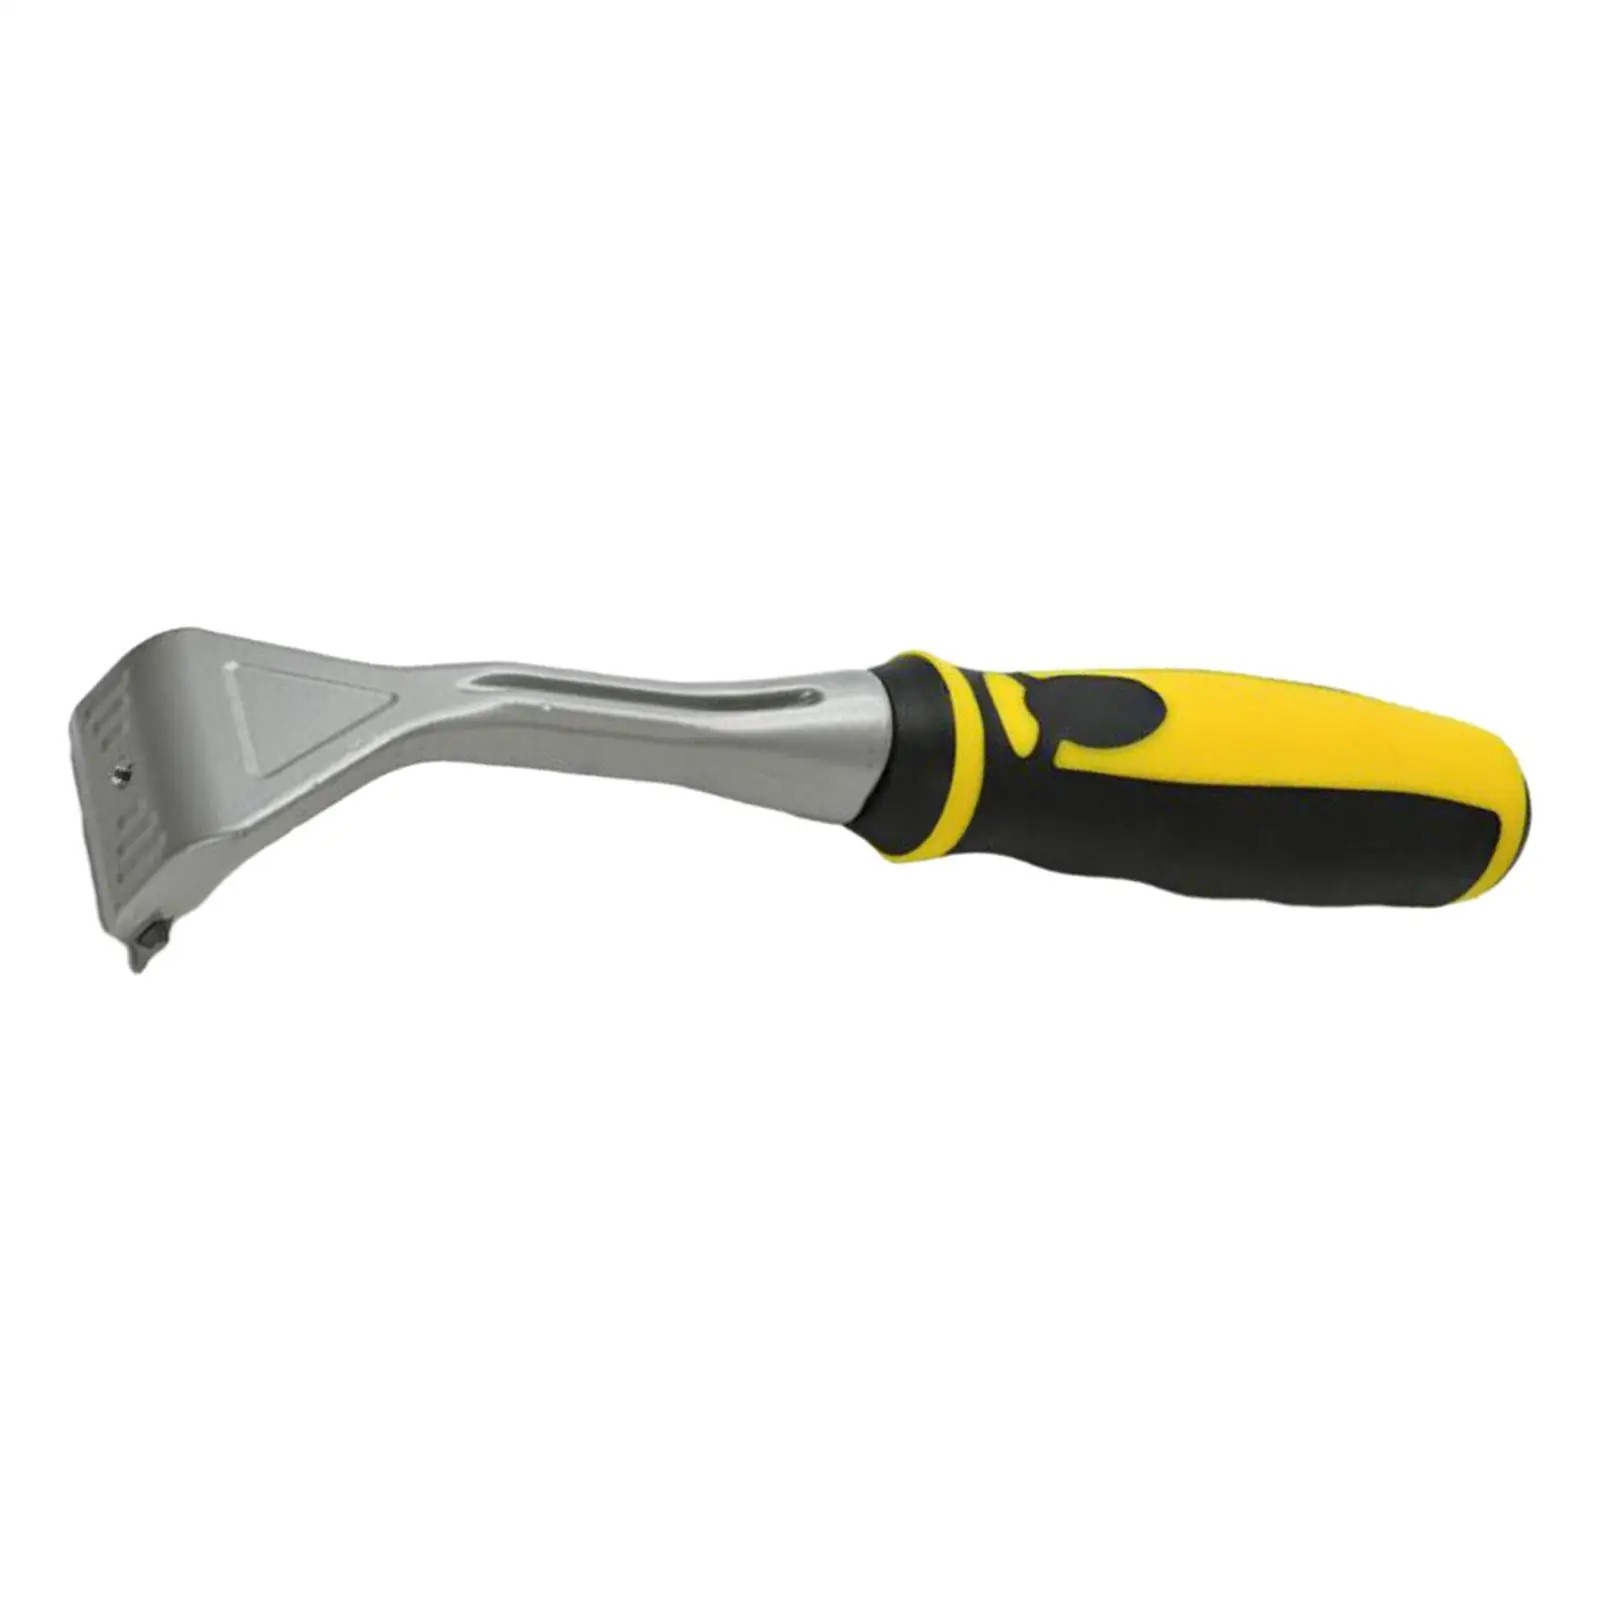 Blade Scraper Tool Paint Removal Tool Versatile Ergonomic Aluminum Headed Putty Knife 10x2inch for Window Sticker Durable